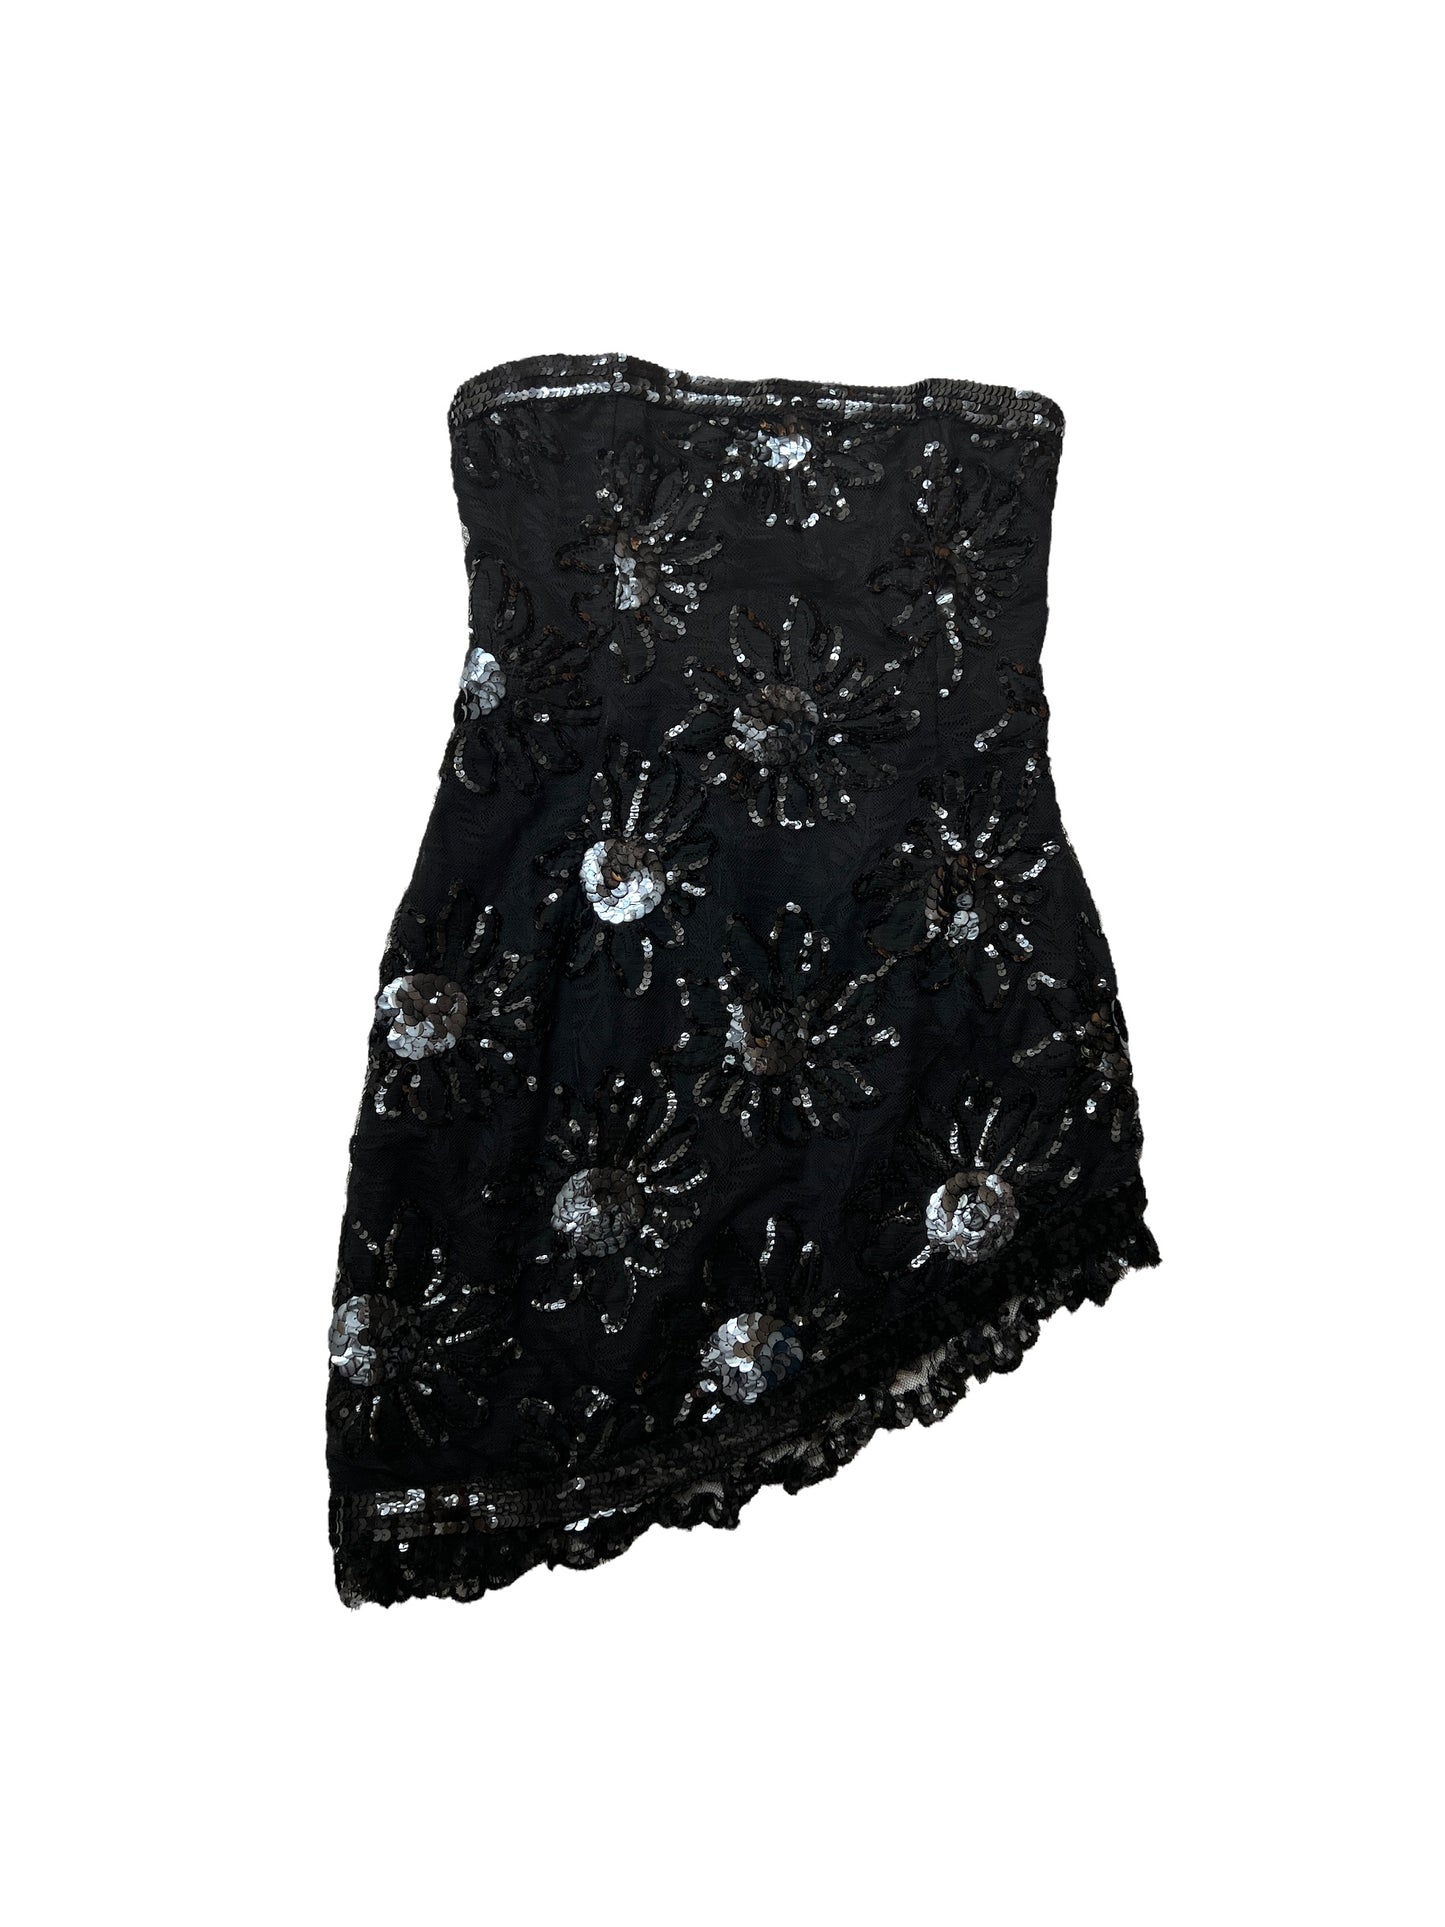 Vintage Black Dress with Sequins - S